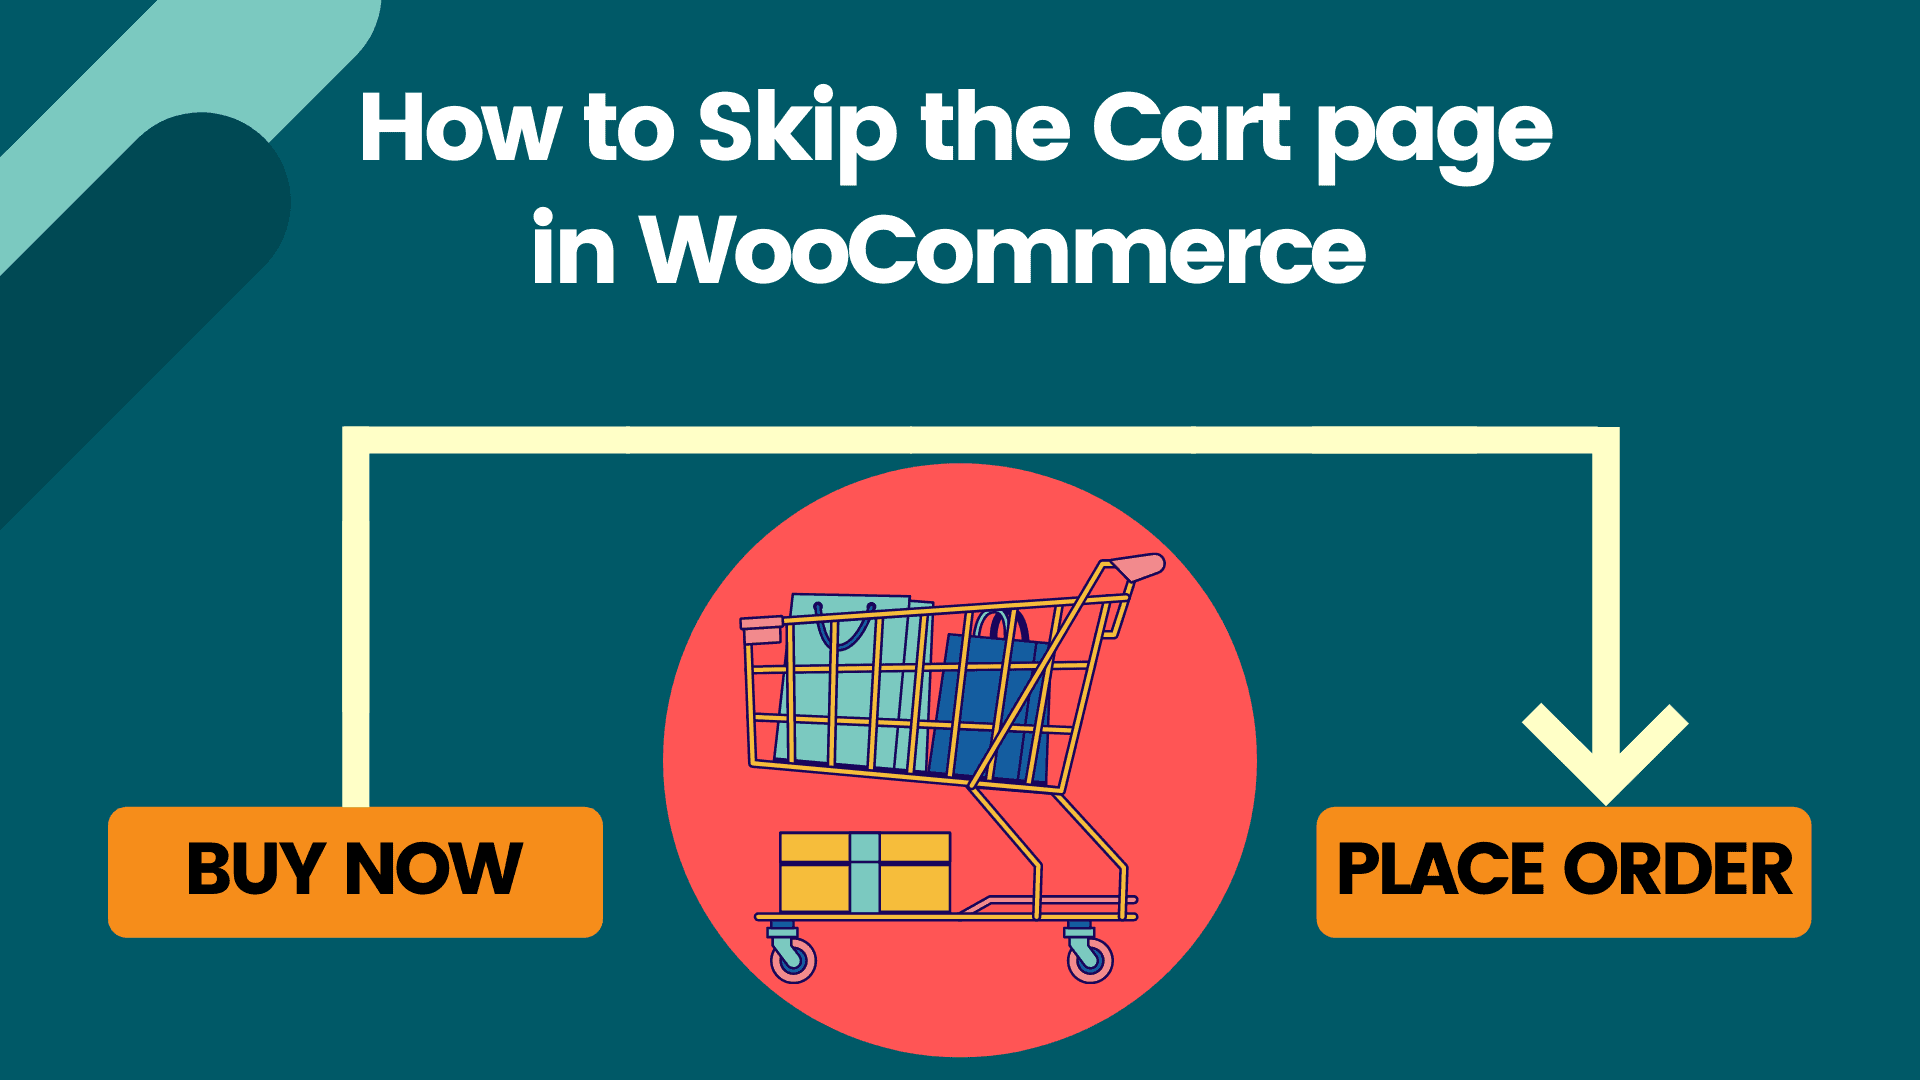 https://woostify.com/wp-content/uploads/2021/08/woocommerce-skip-cart-page-1.png